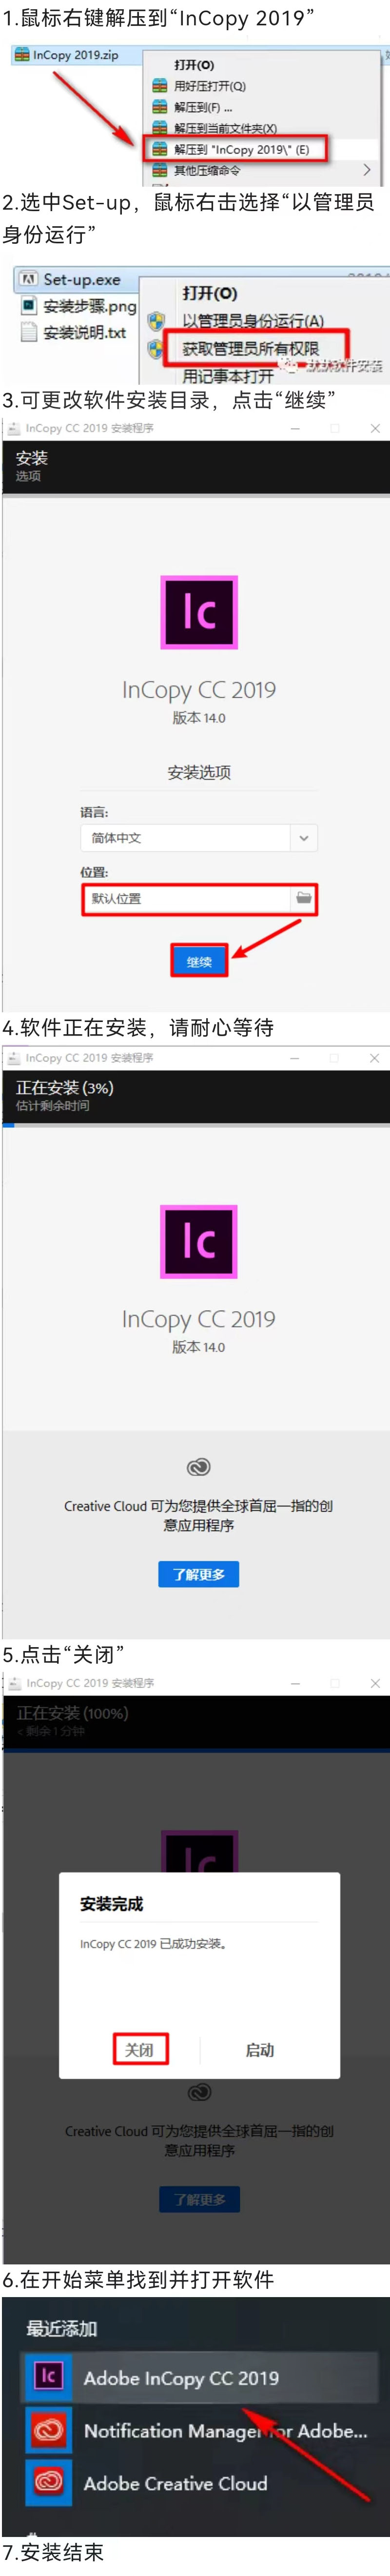 Adobe InCopy 2019װ̳.jpg